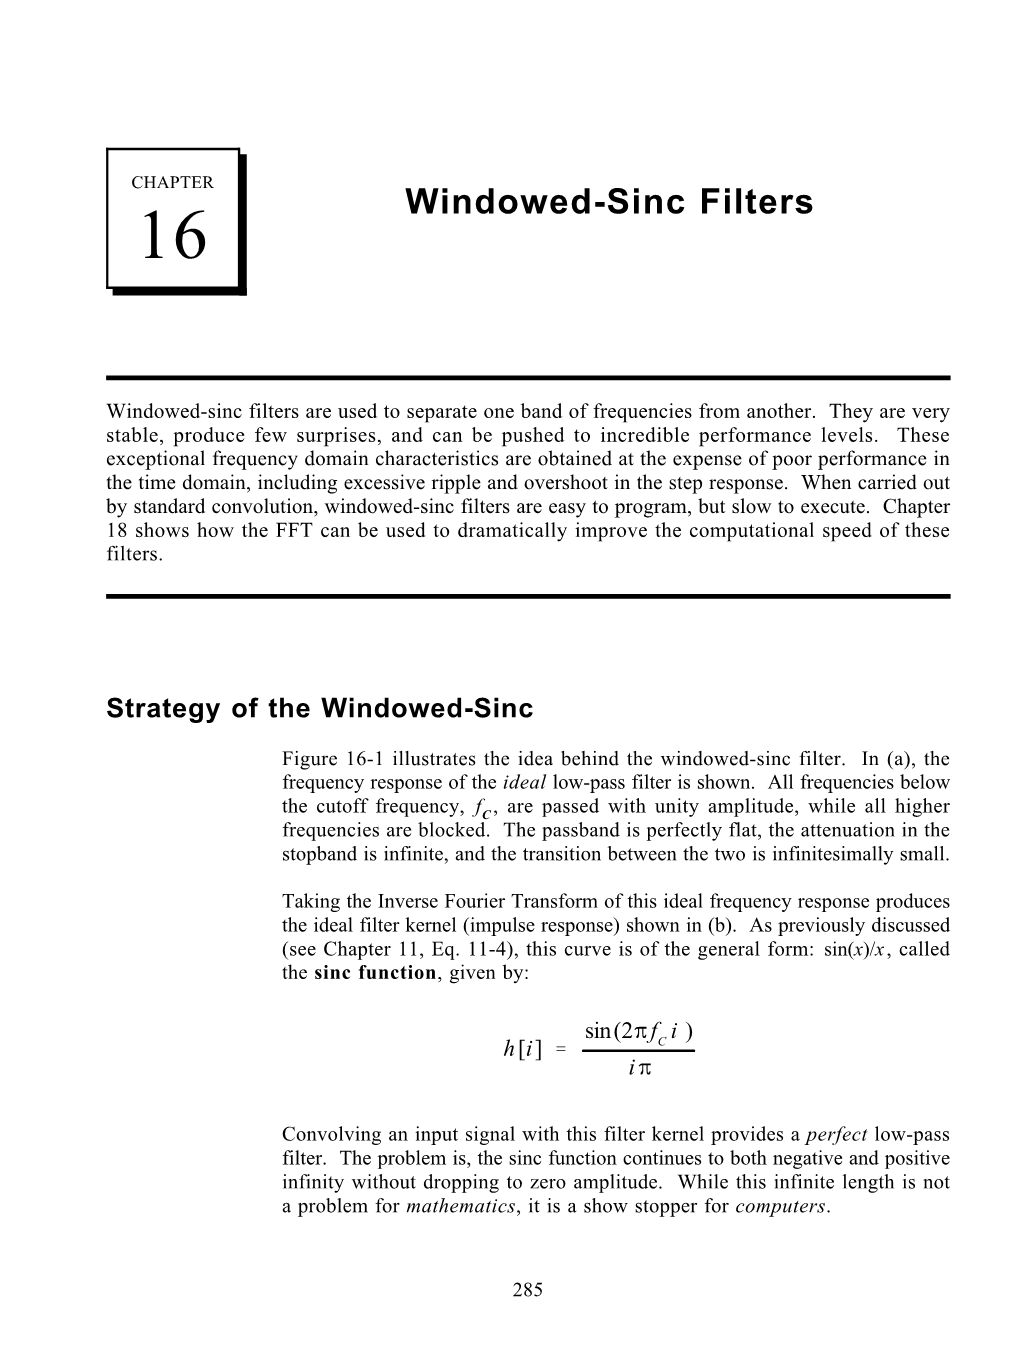 Chapter 16: Windowed-Sinc Filters